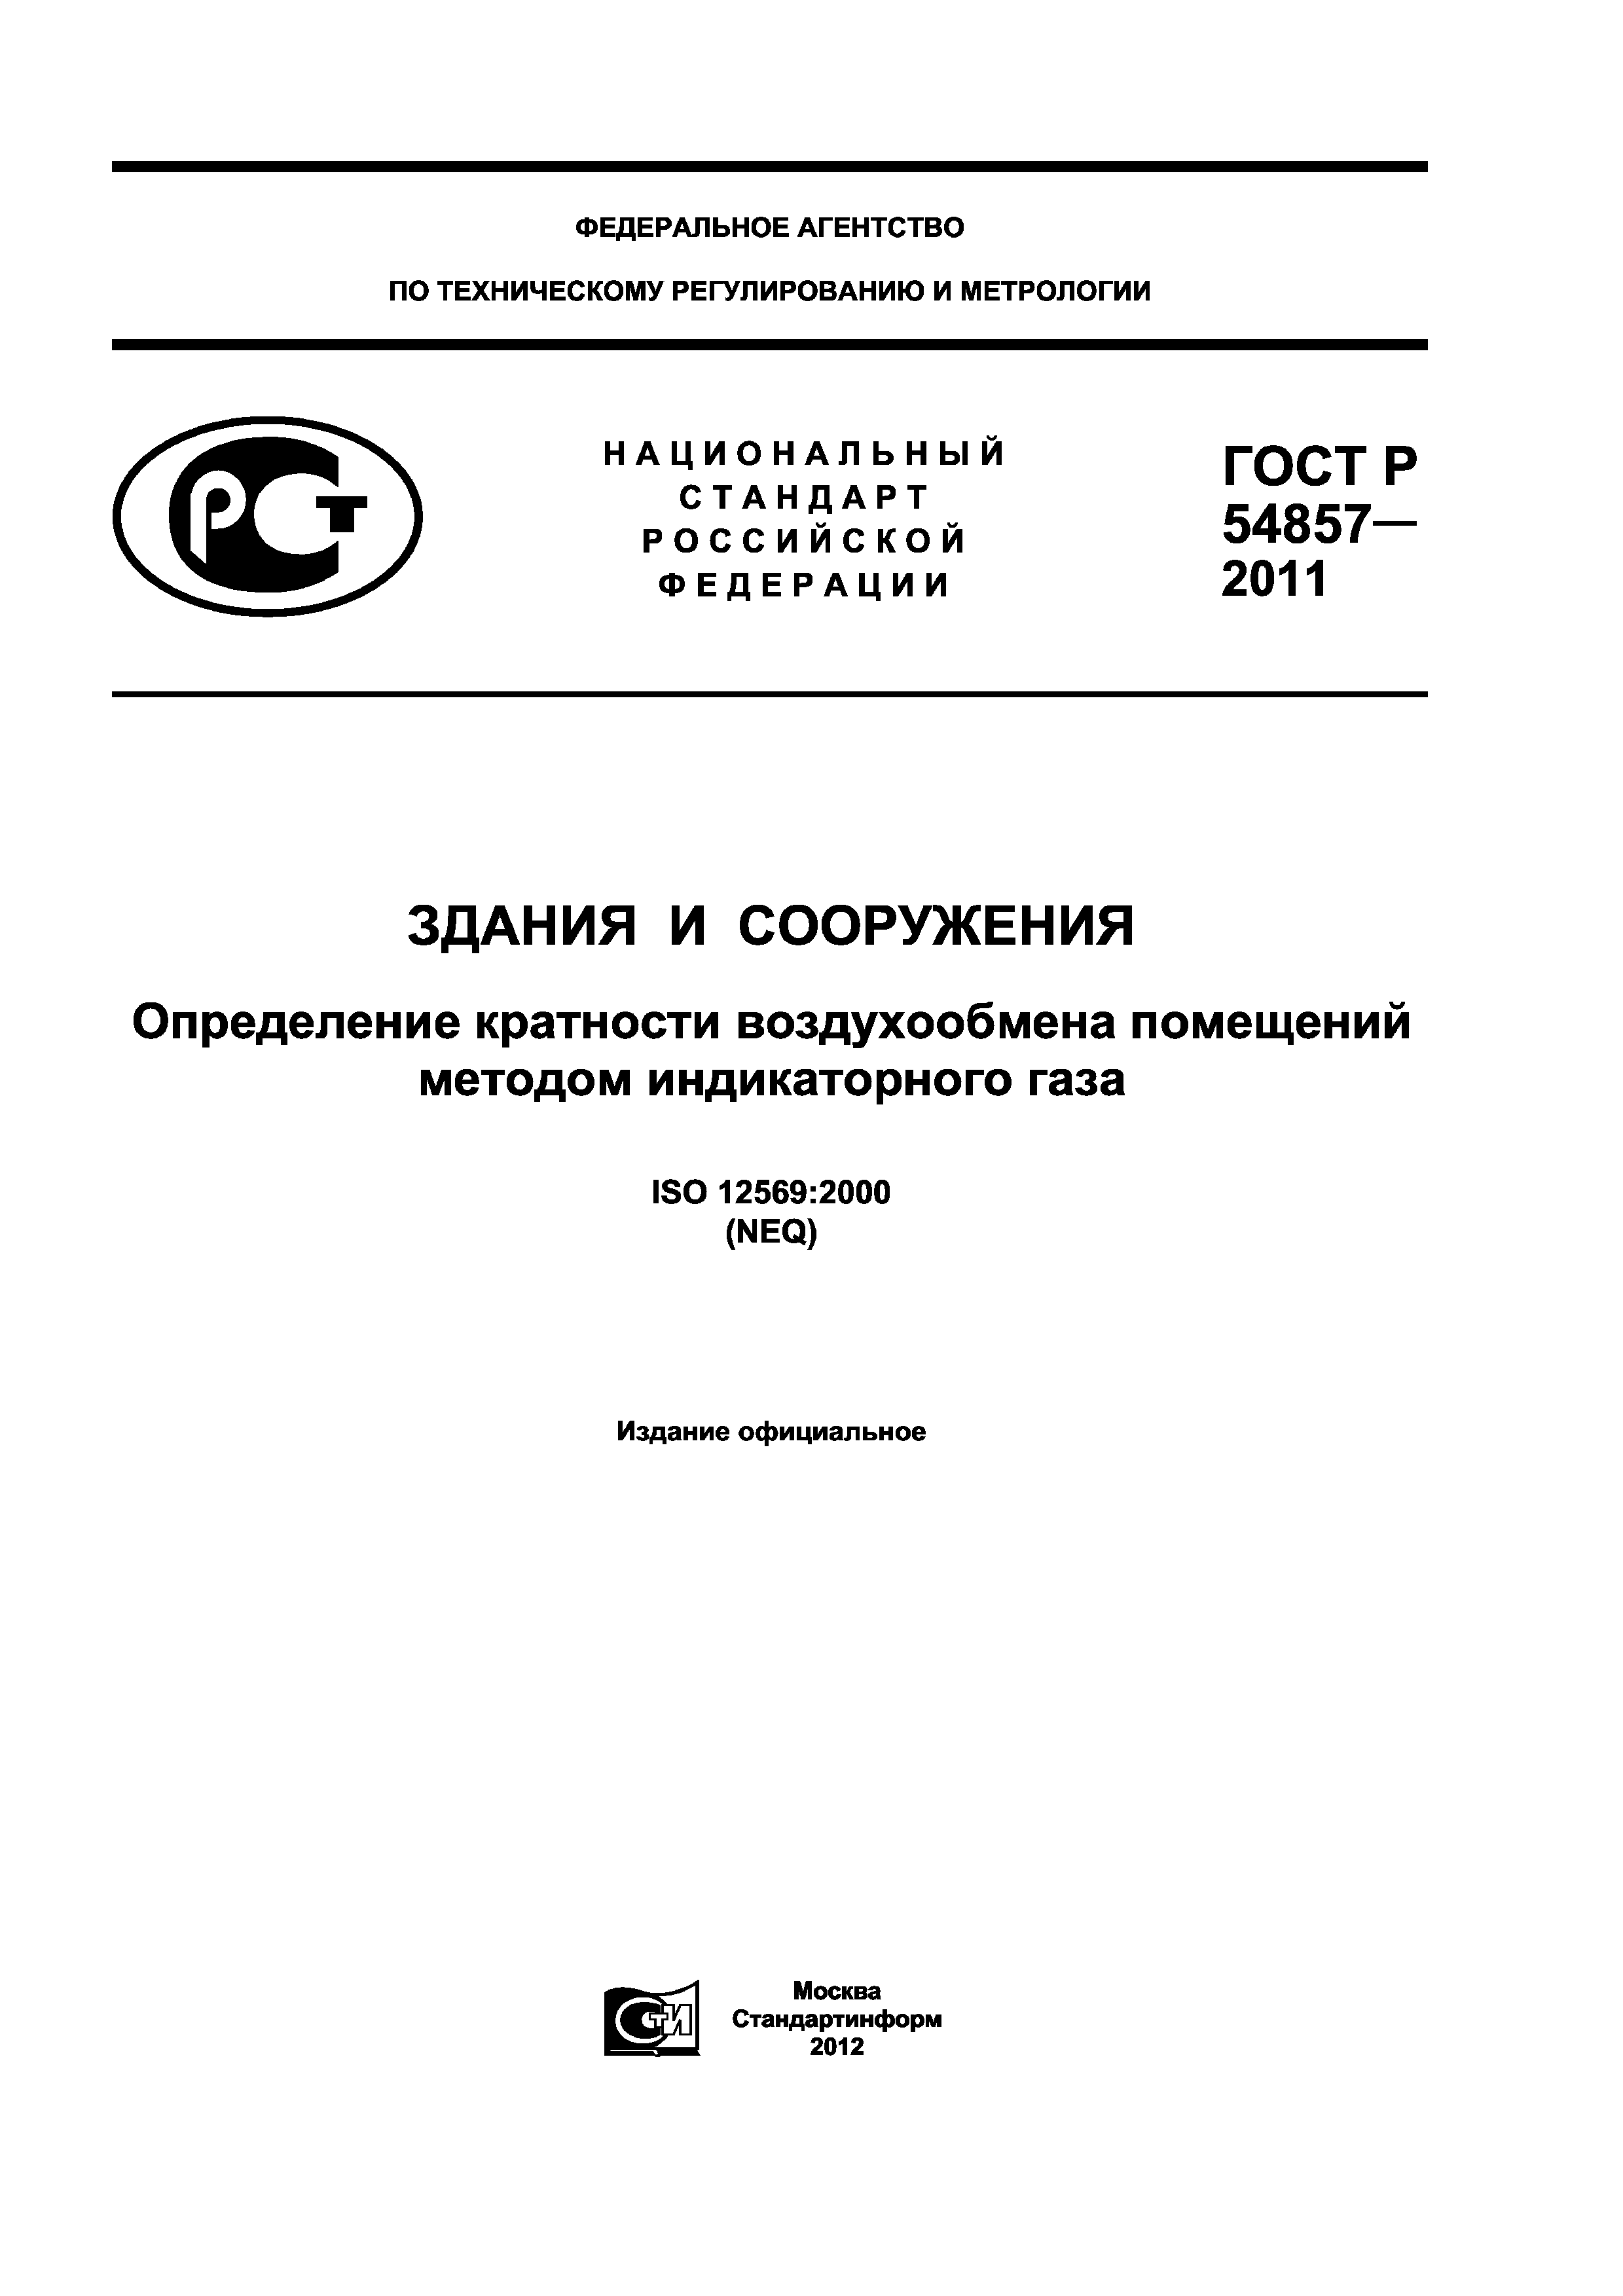 ГОСТ Р 54857-2011